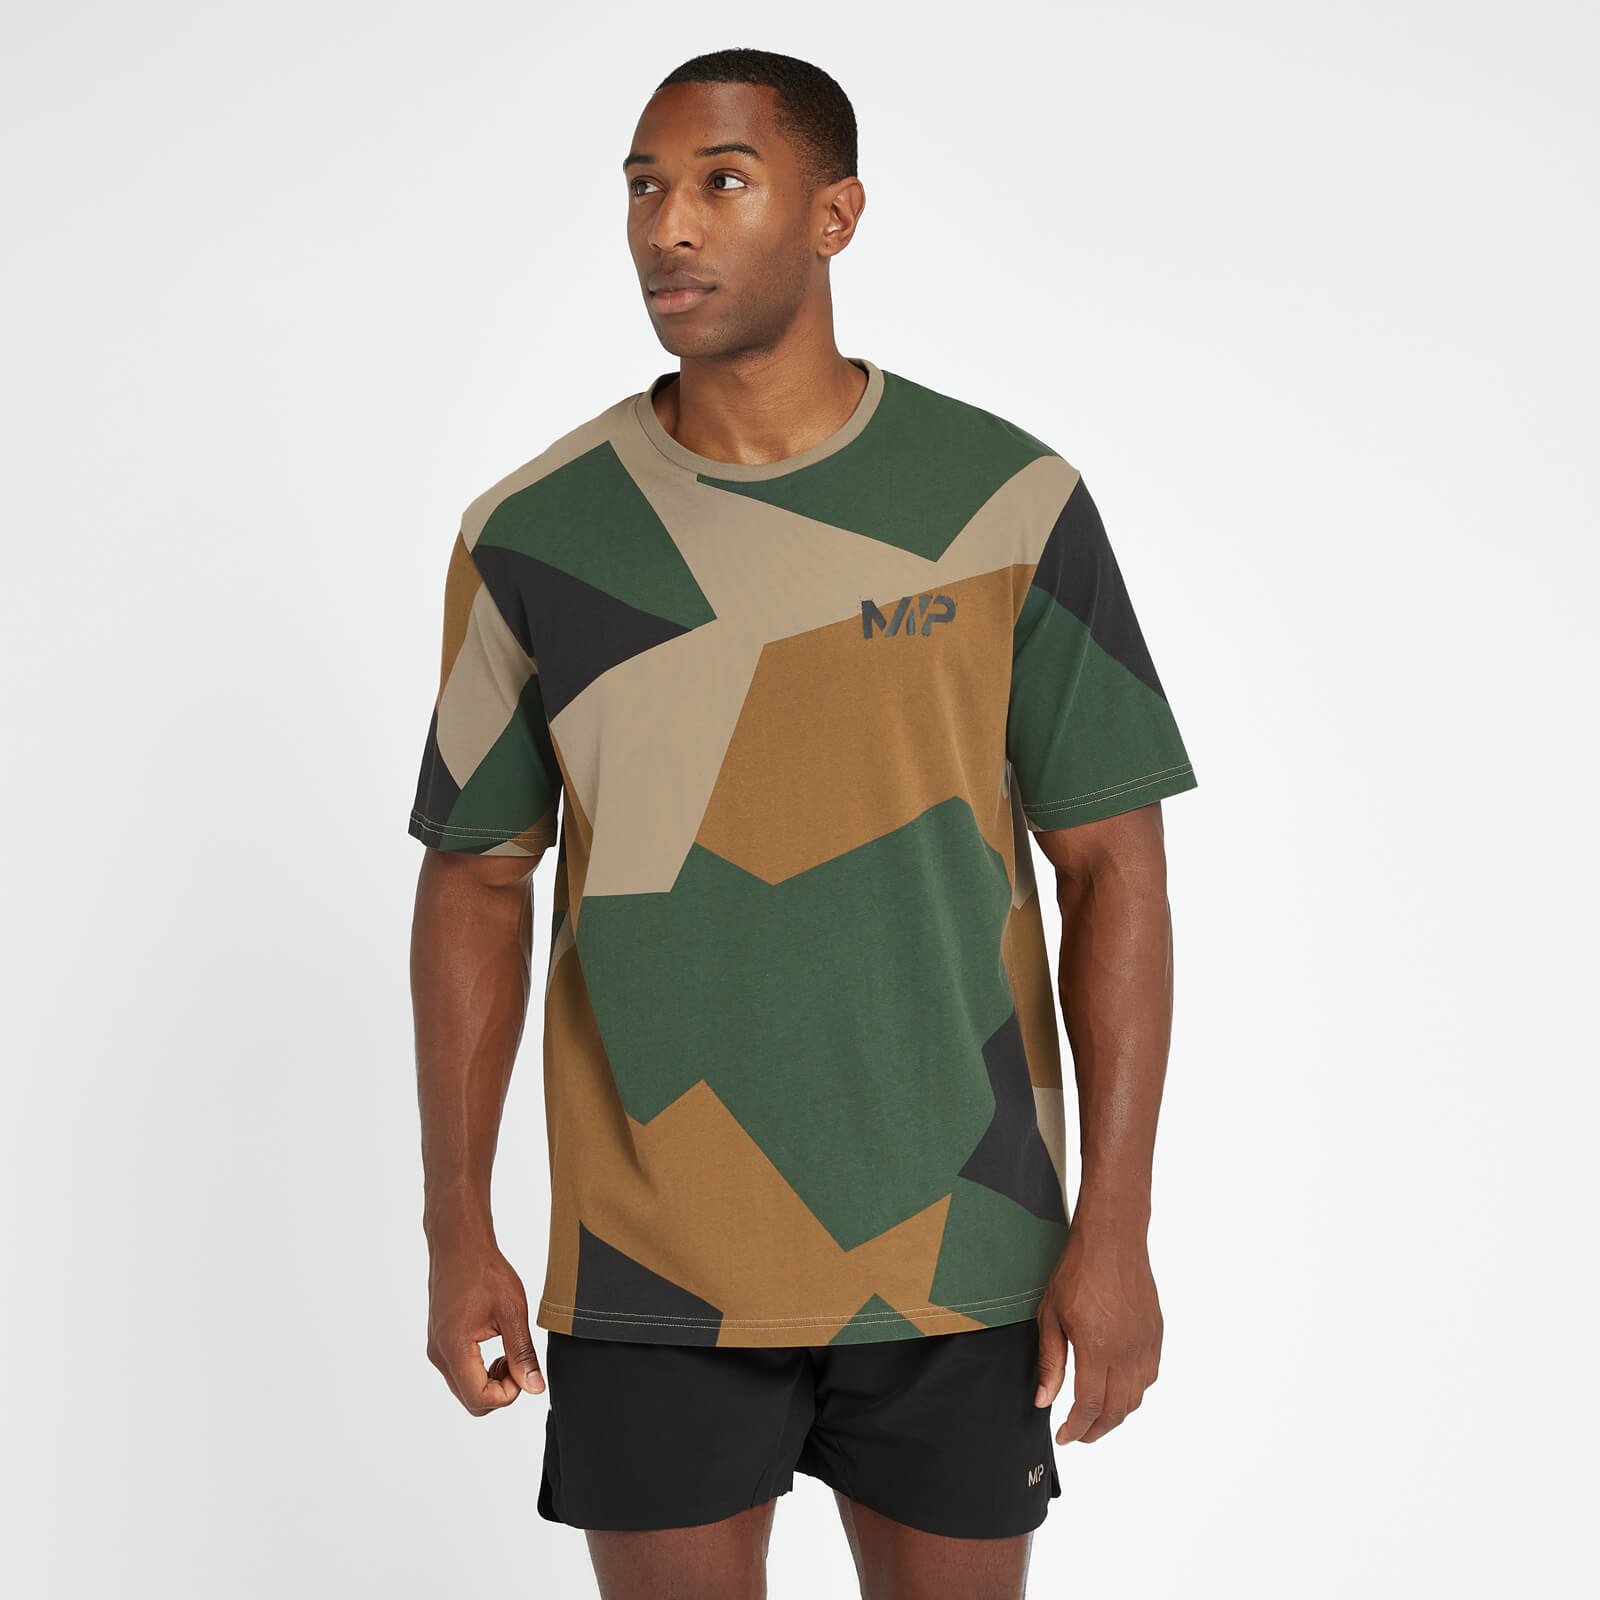 T-shirt Oversize Adapt Washed da MP para Homem - Camo